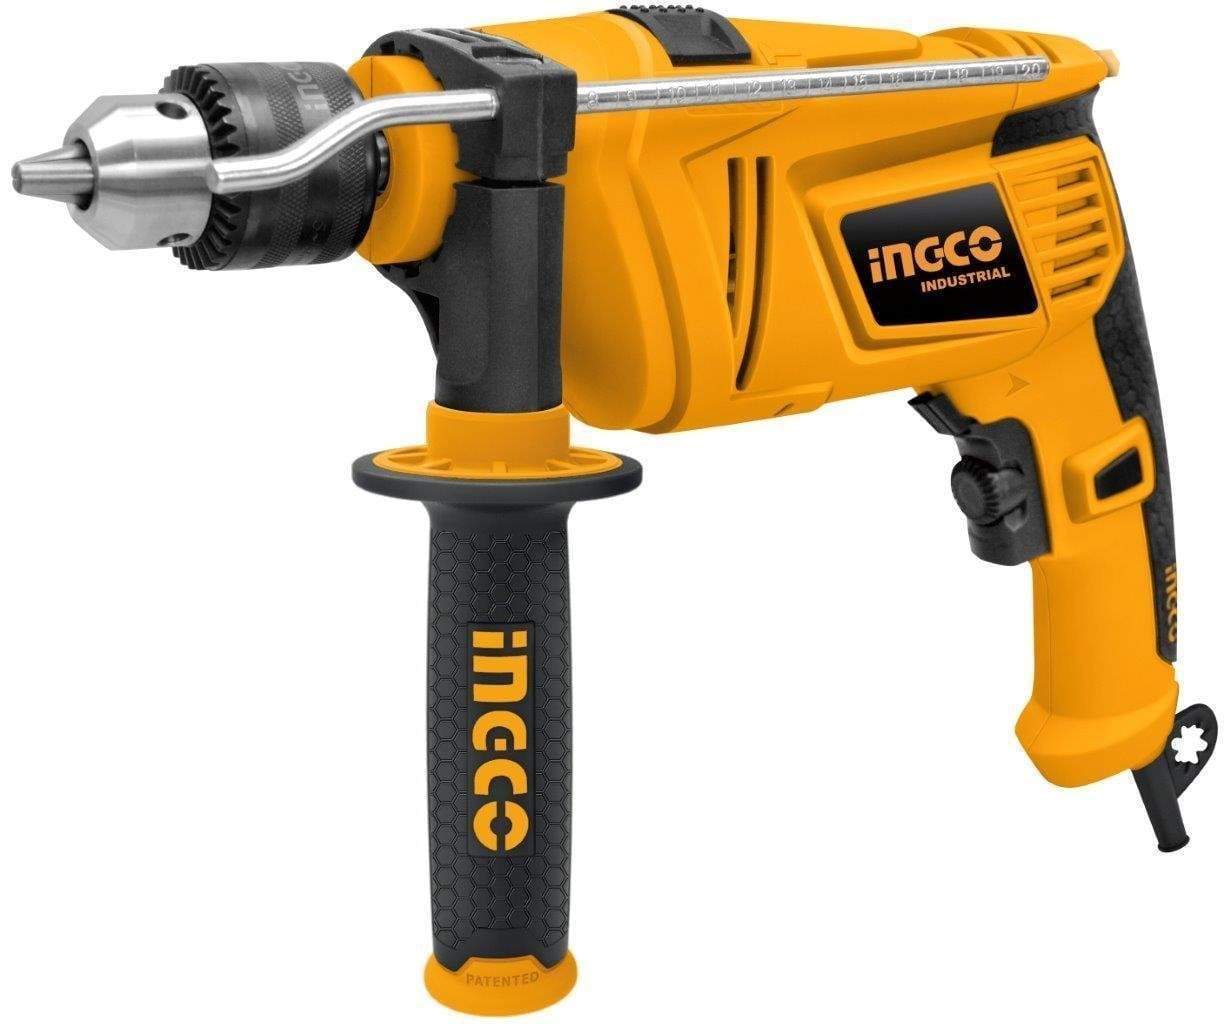 Ingco Hammer Impact Drill 2-13mm 850W - ID8508-2 | Supply Master | Accra, Ghana Tools Building Steel Engineering Hardware tool